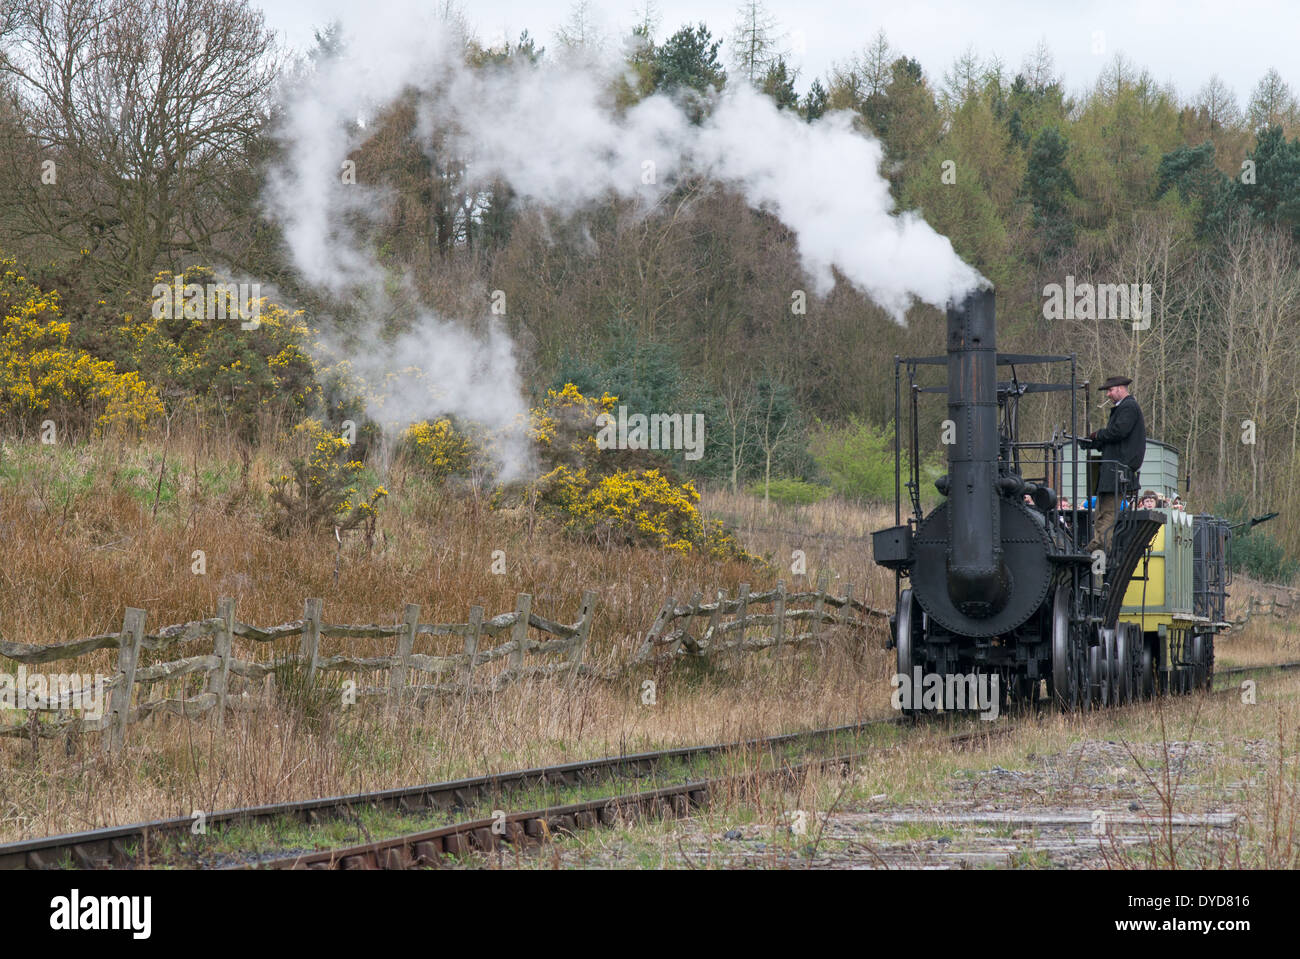 Replica 19th century steam locomotive Locomotion Beamish Museum north east England UK Stock Photo